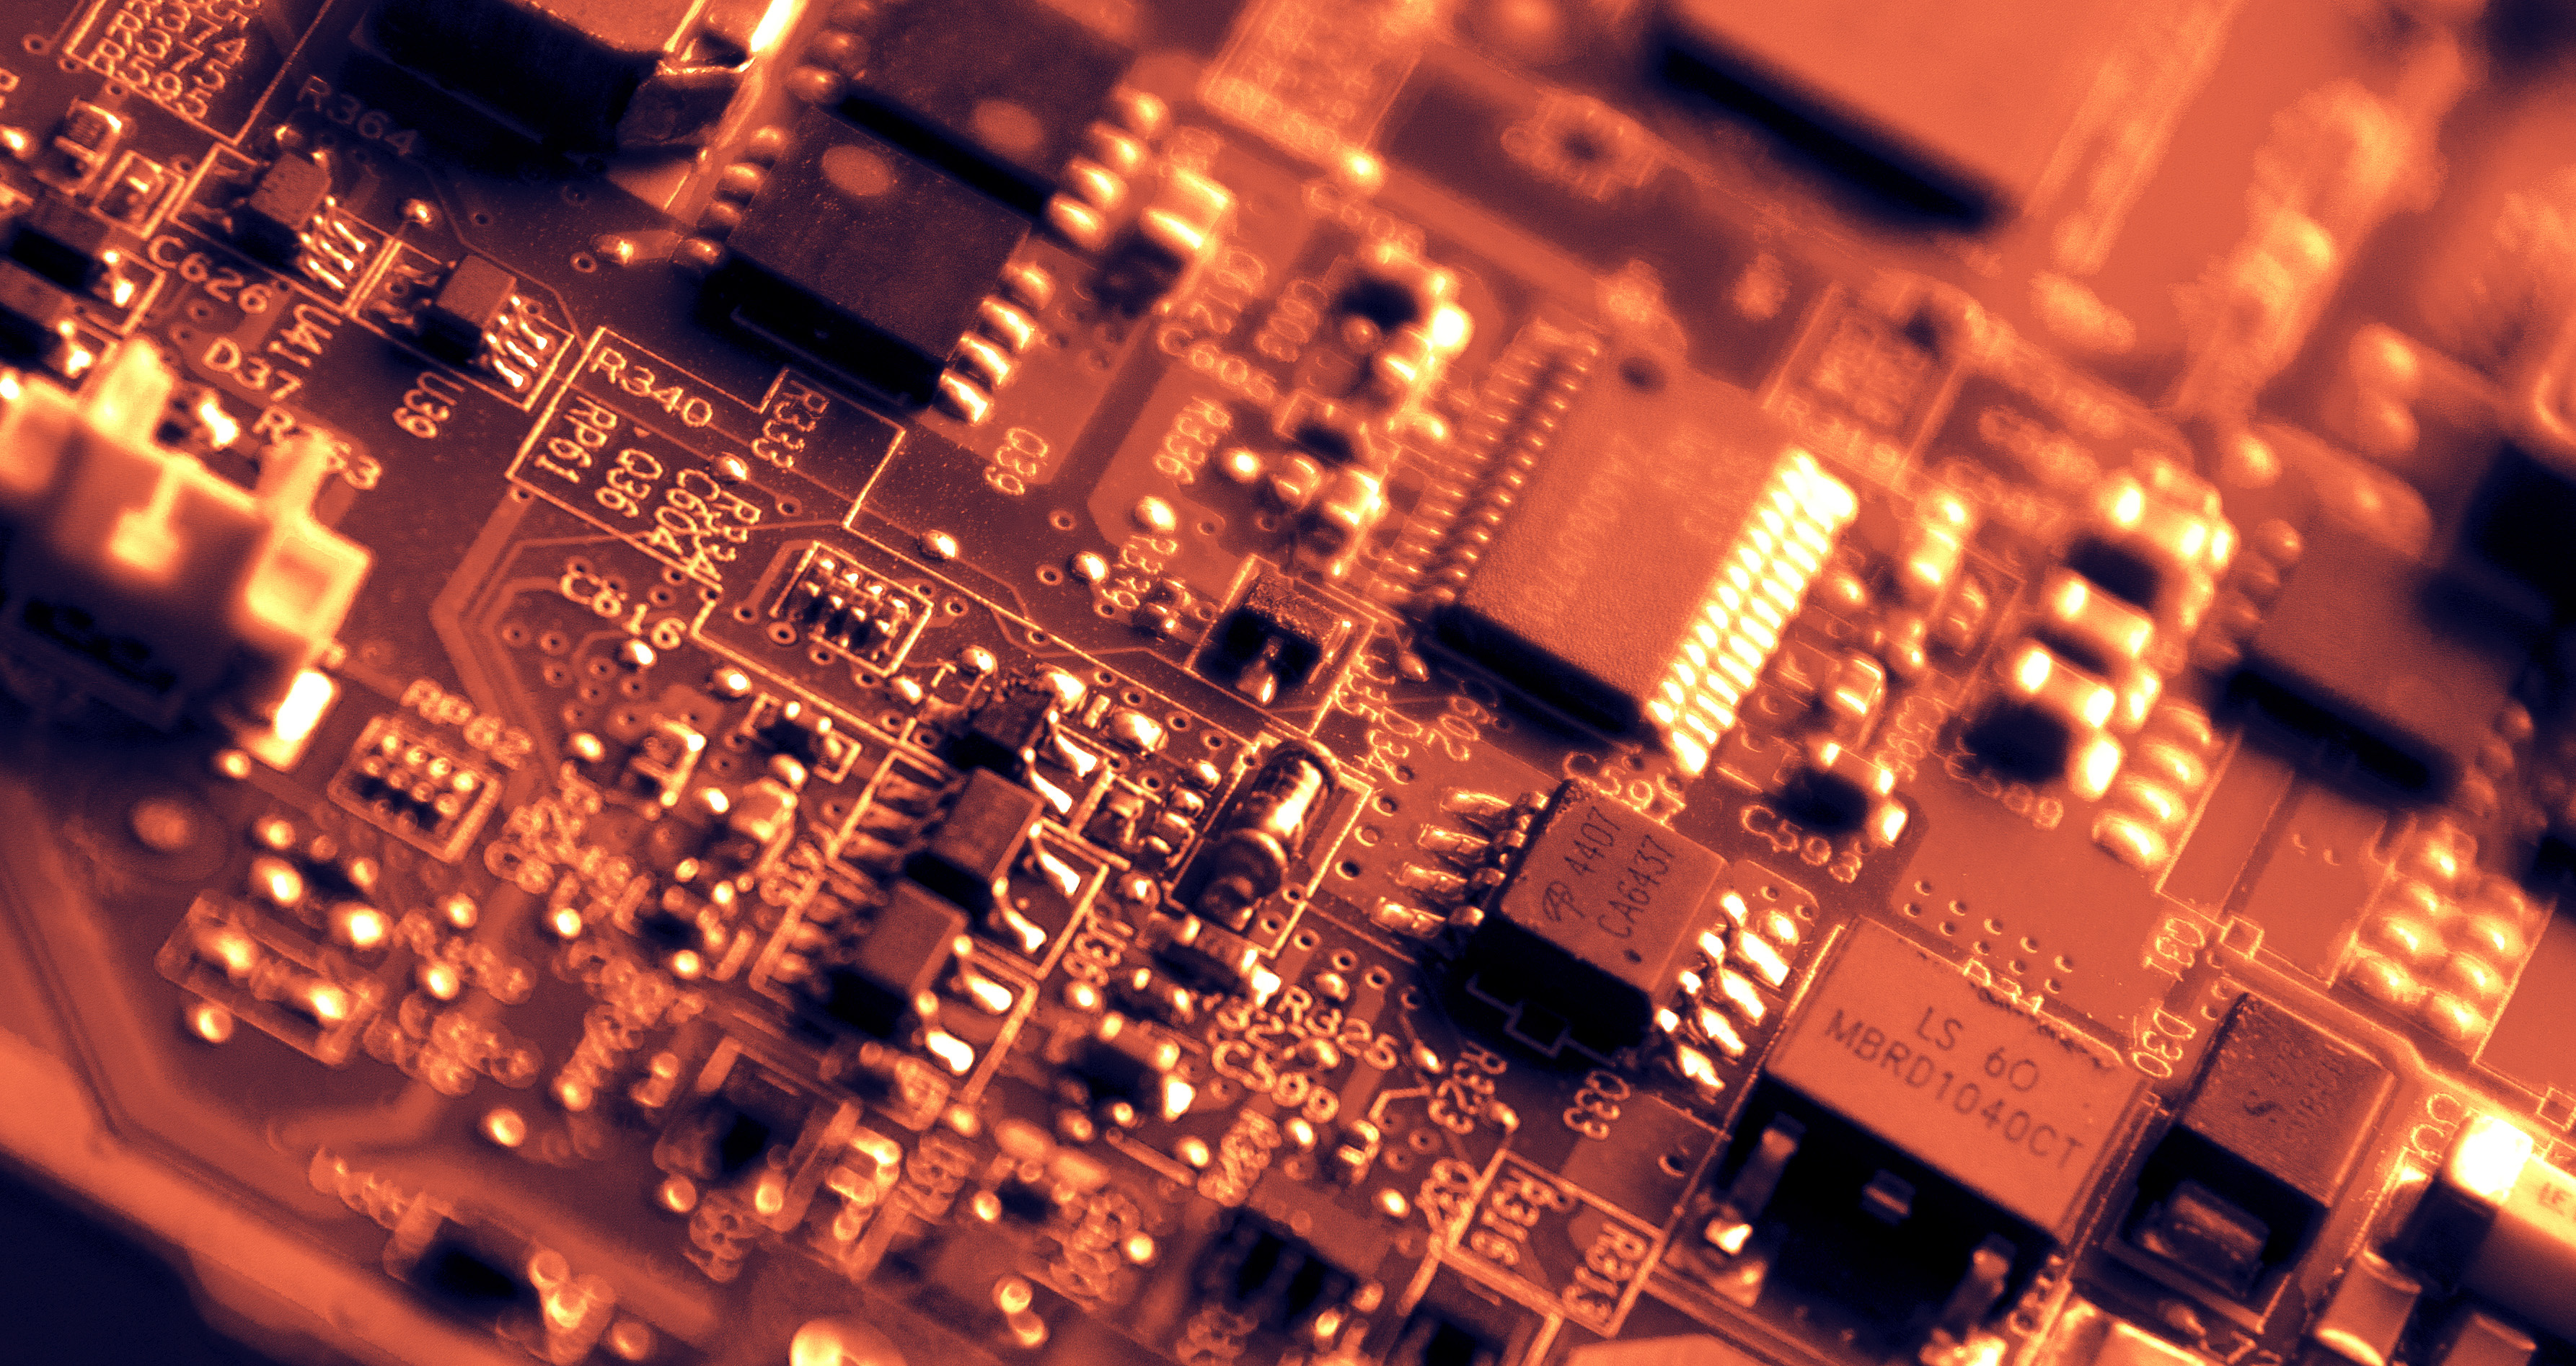 How does an FPGA work?